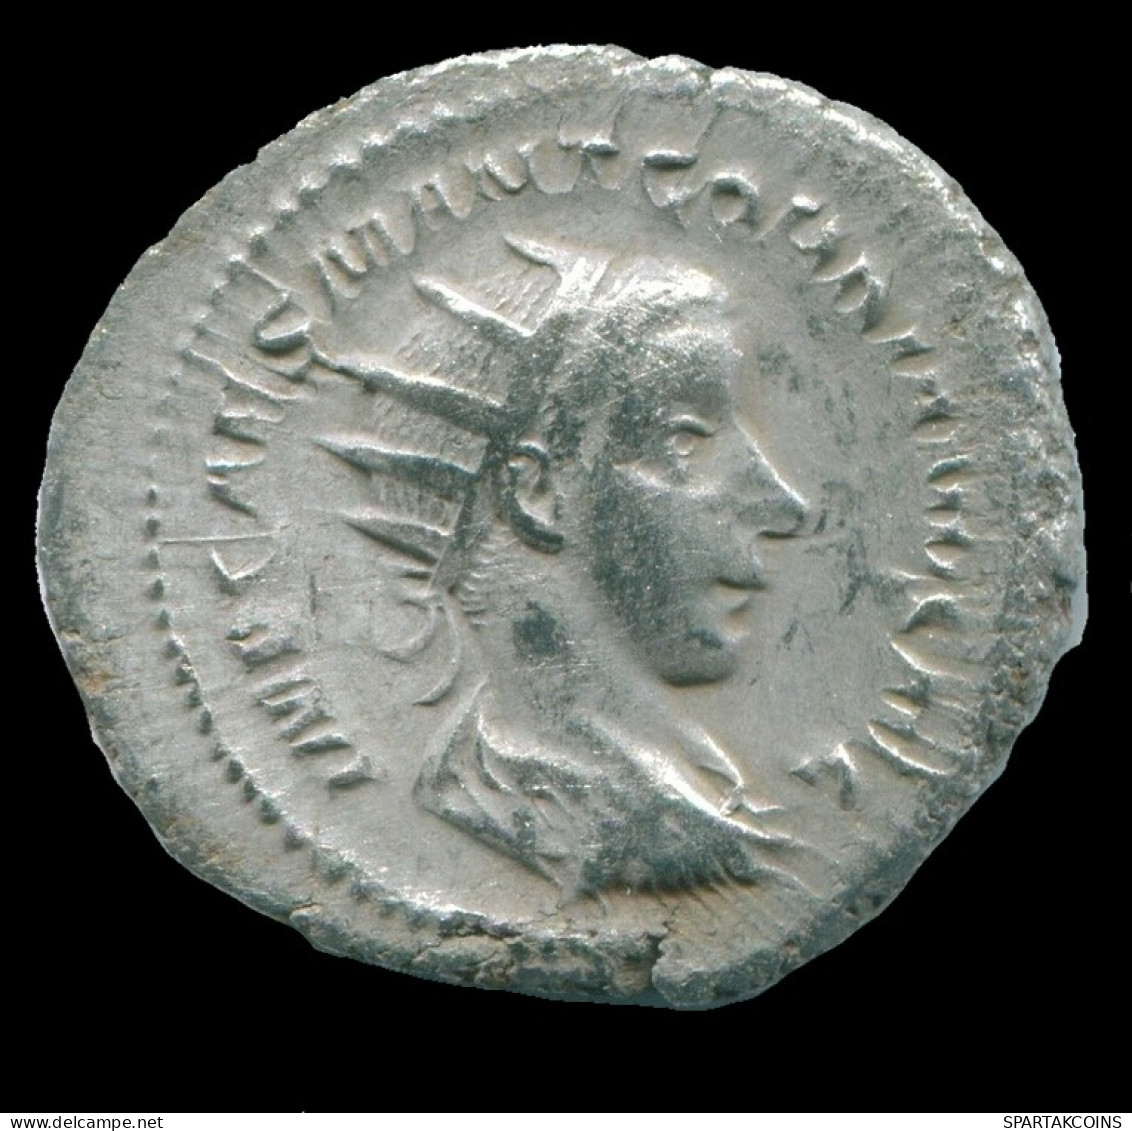 GORDIAN III AR ANTONINIANUS ROME Mint AD 239-240 CONCORDIA AVG #ANC13164.35.U.A - La Crisis Militar (235 / 284)